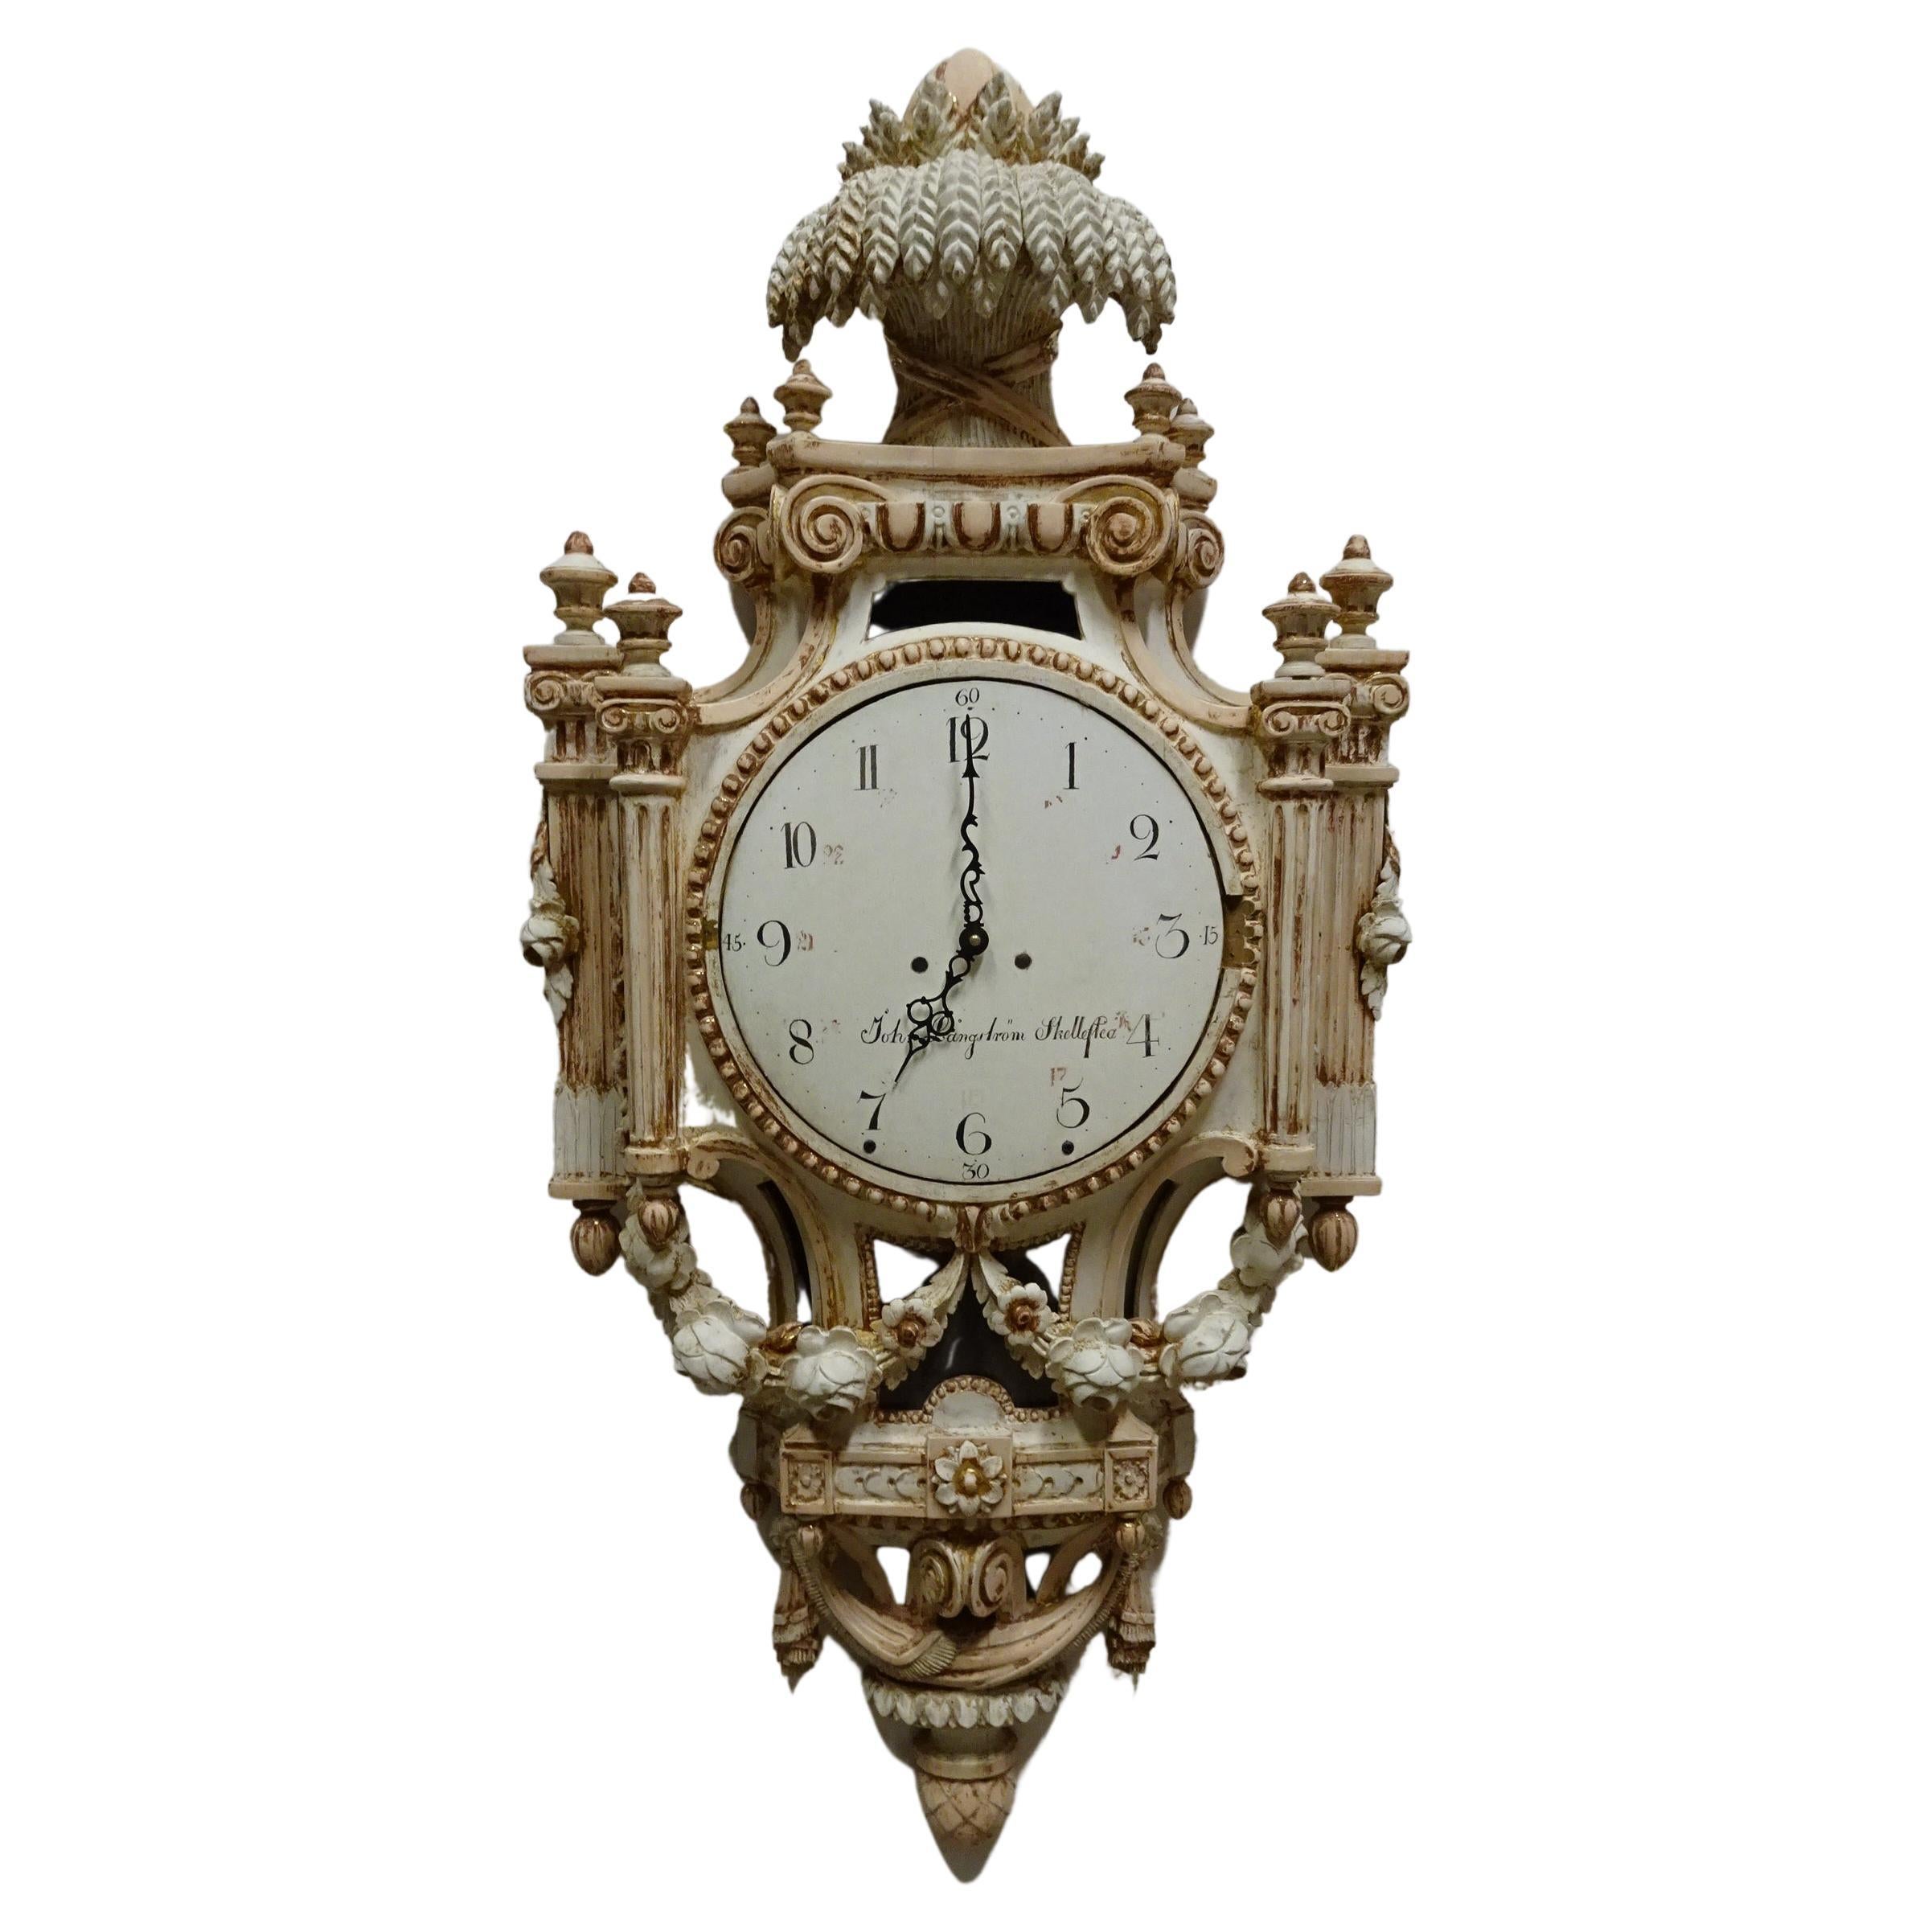 Unique 100% Original Finished Swedish Gustavian Wall Clock